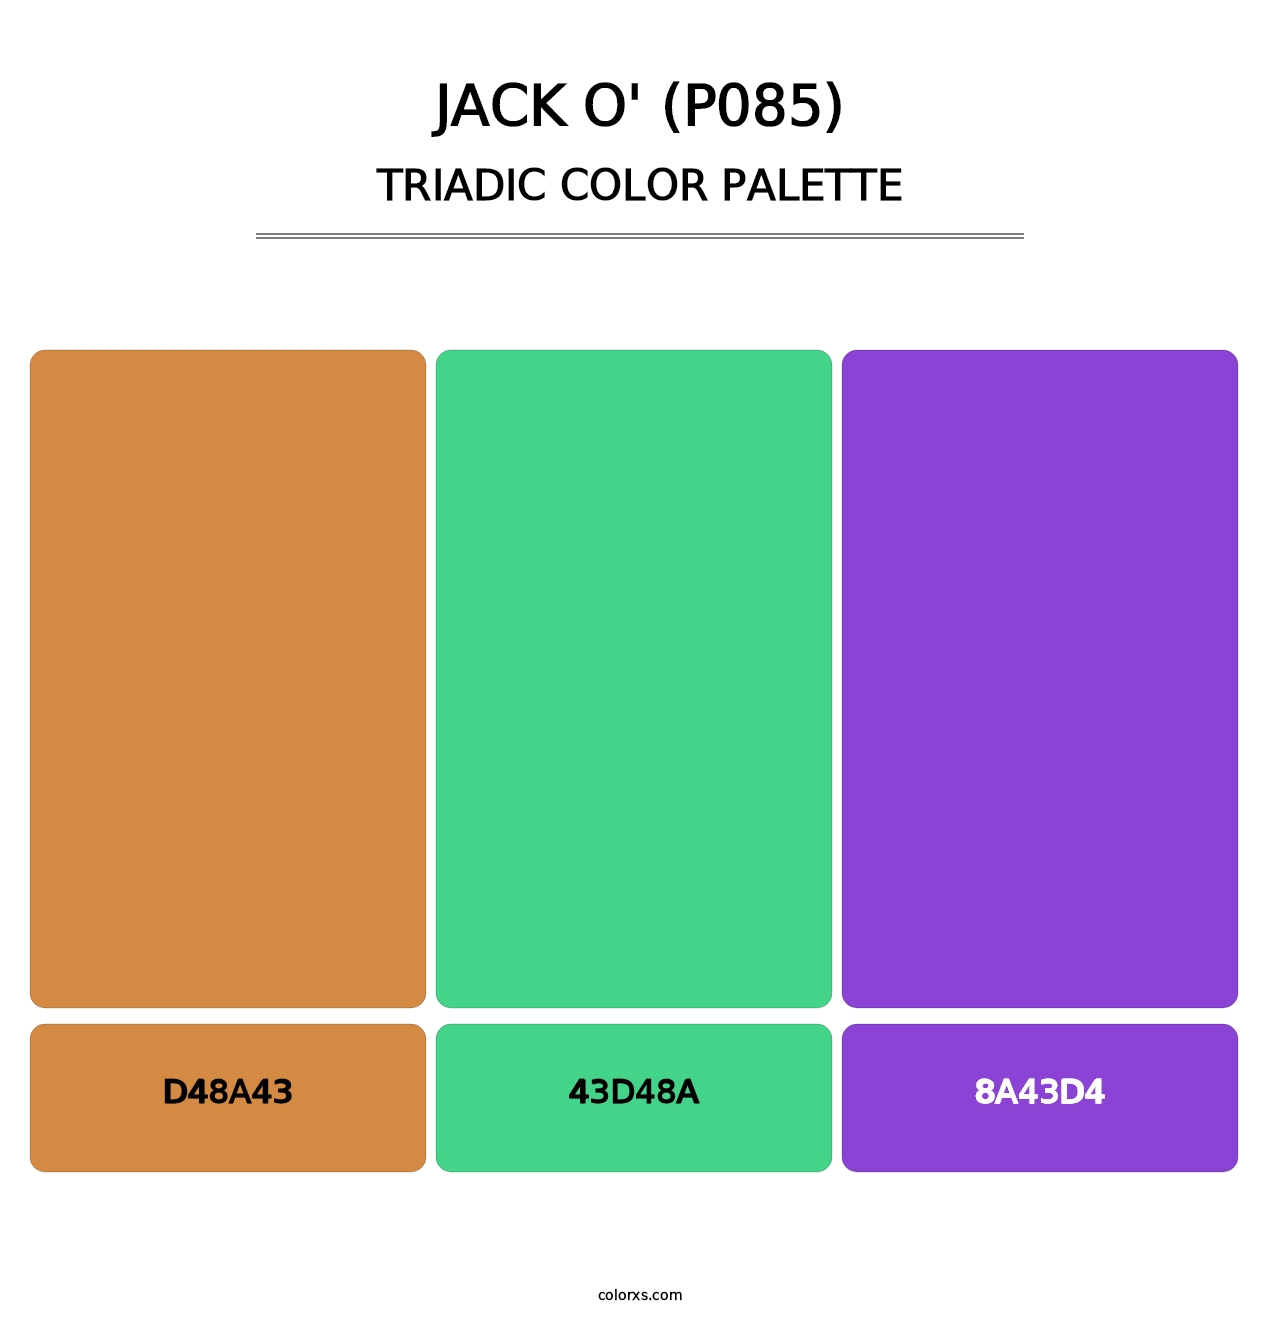 Jack O' (P085) - Triadic Color Palette